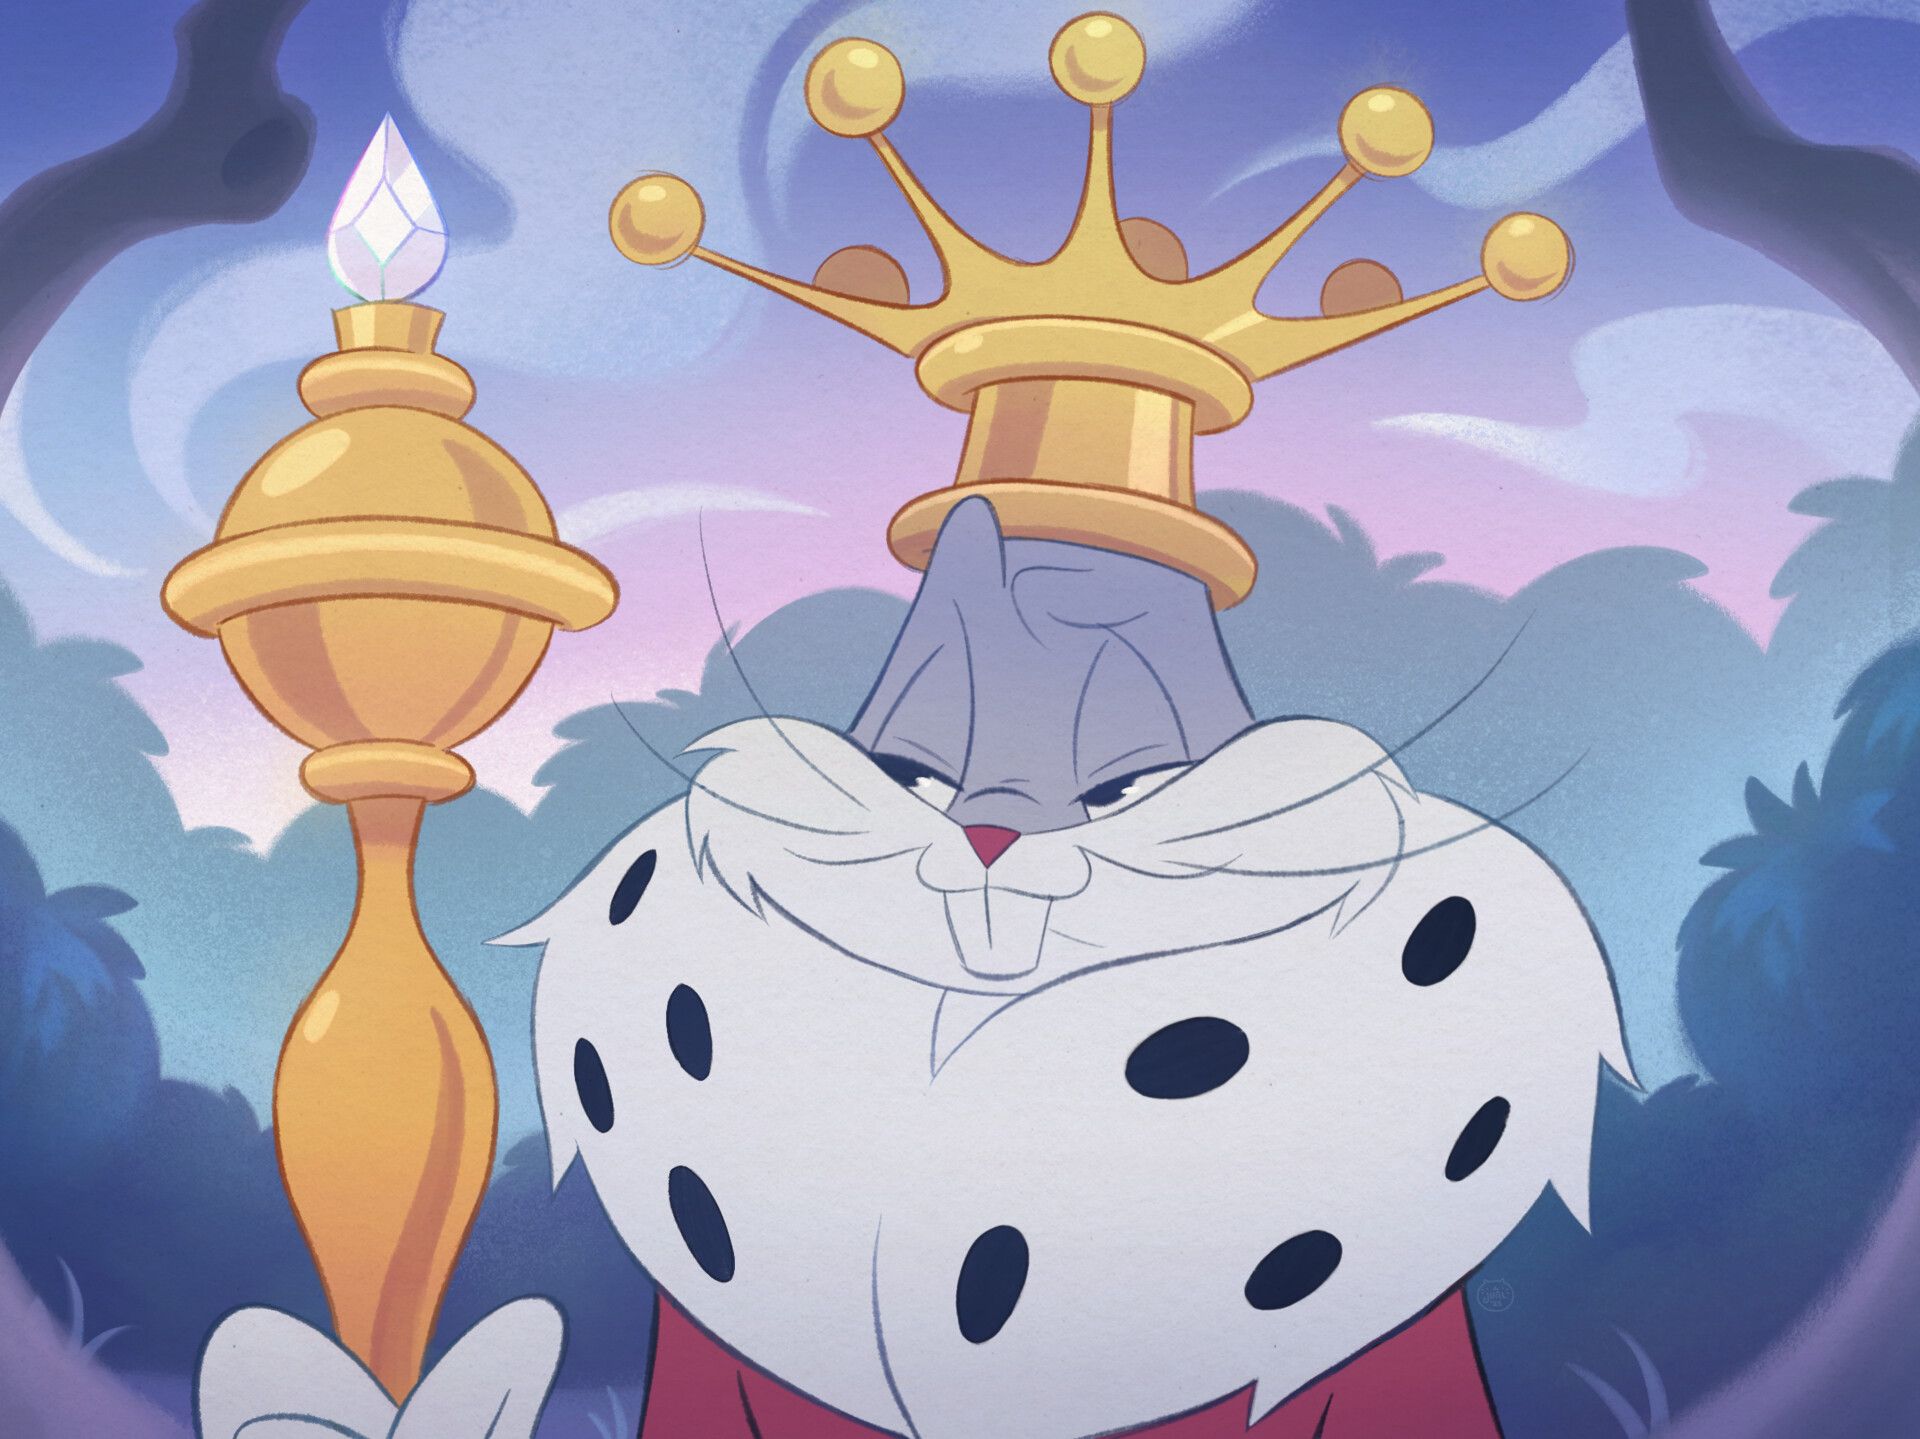 King Bugs Bunny: Screencap Redraw